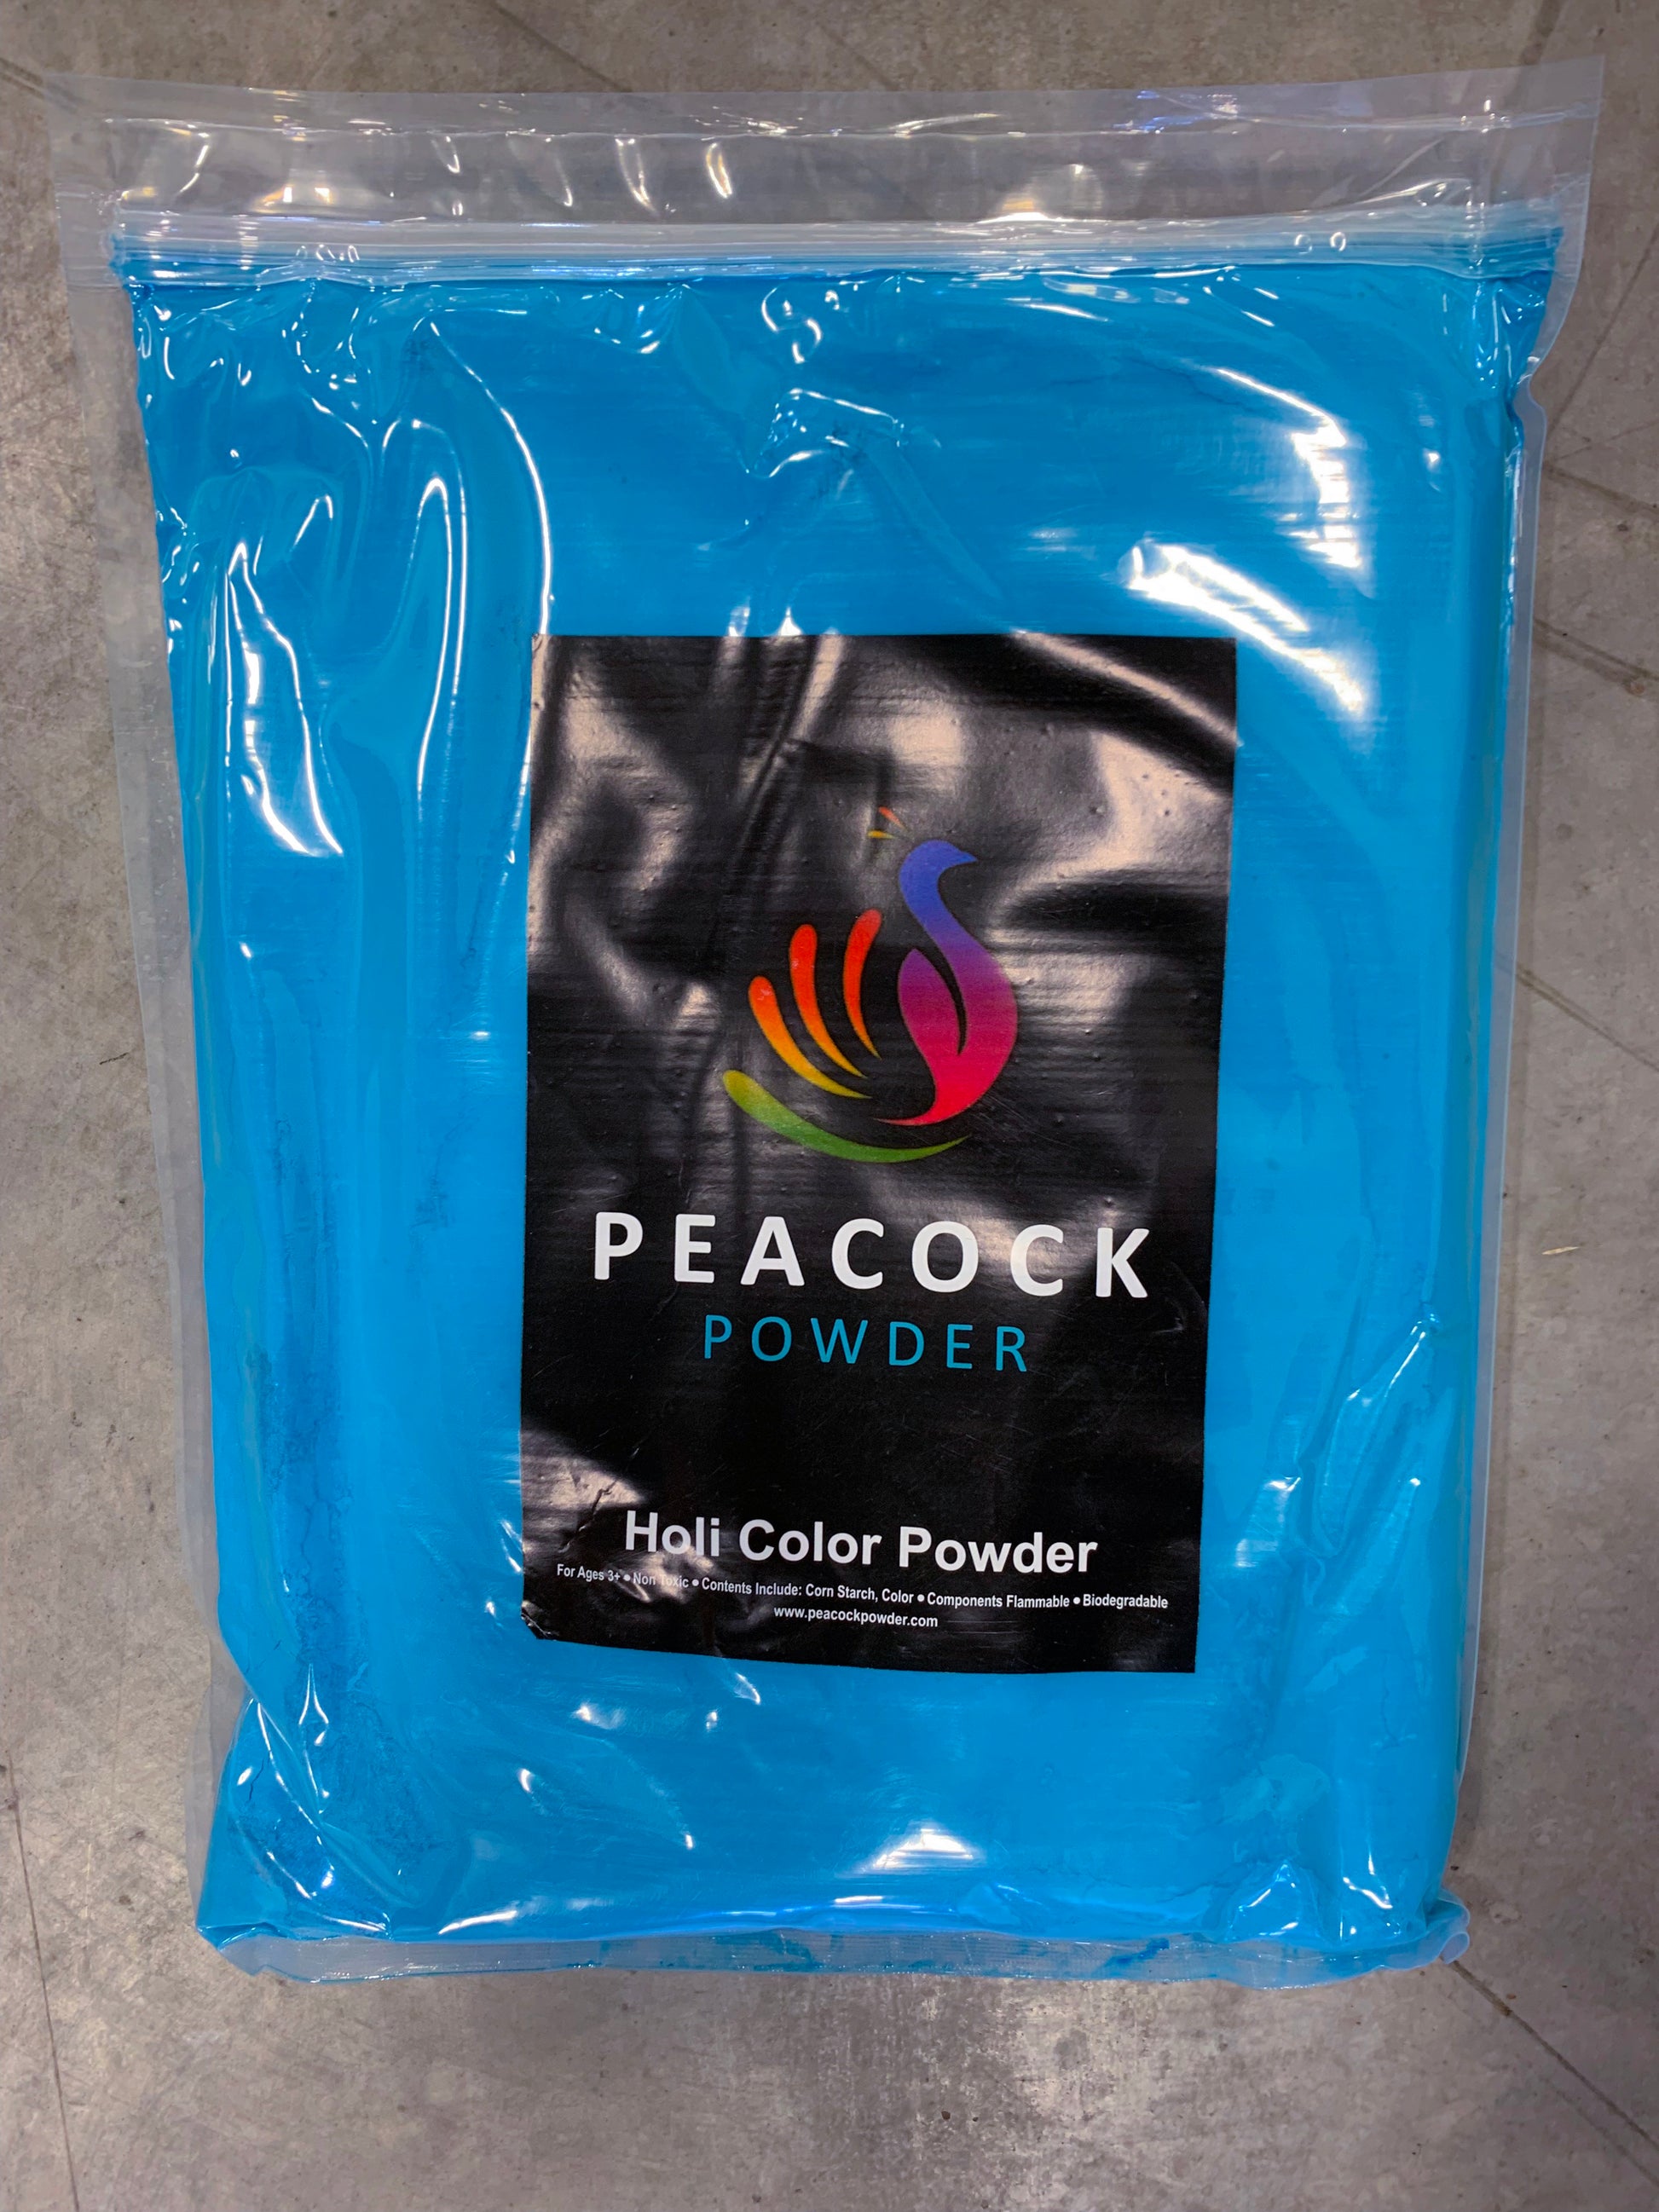 Colored Chalk Powder 1lb Bags